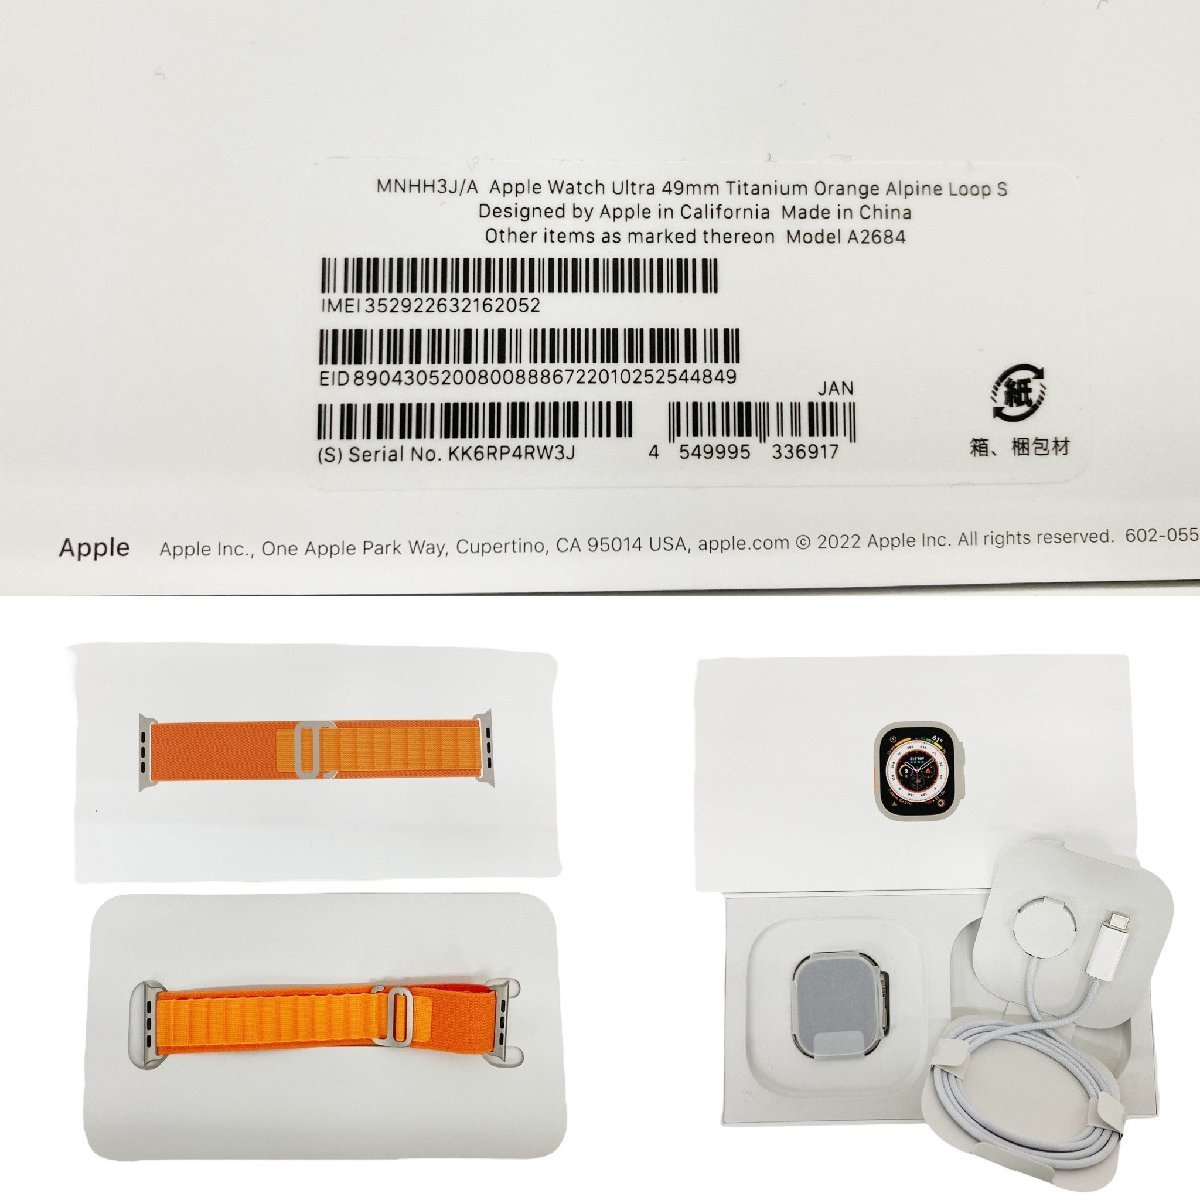 Apple Watch Ultra GPS+Cellular модель 49mm Apple часы Ultra MNHH3J/A orange Alpine петля бытовая техника /028